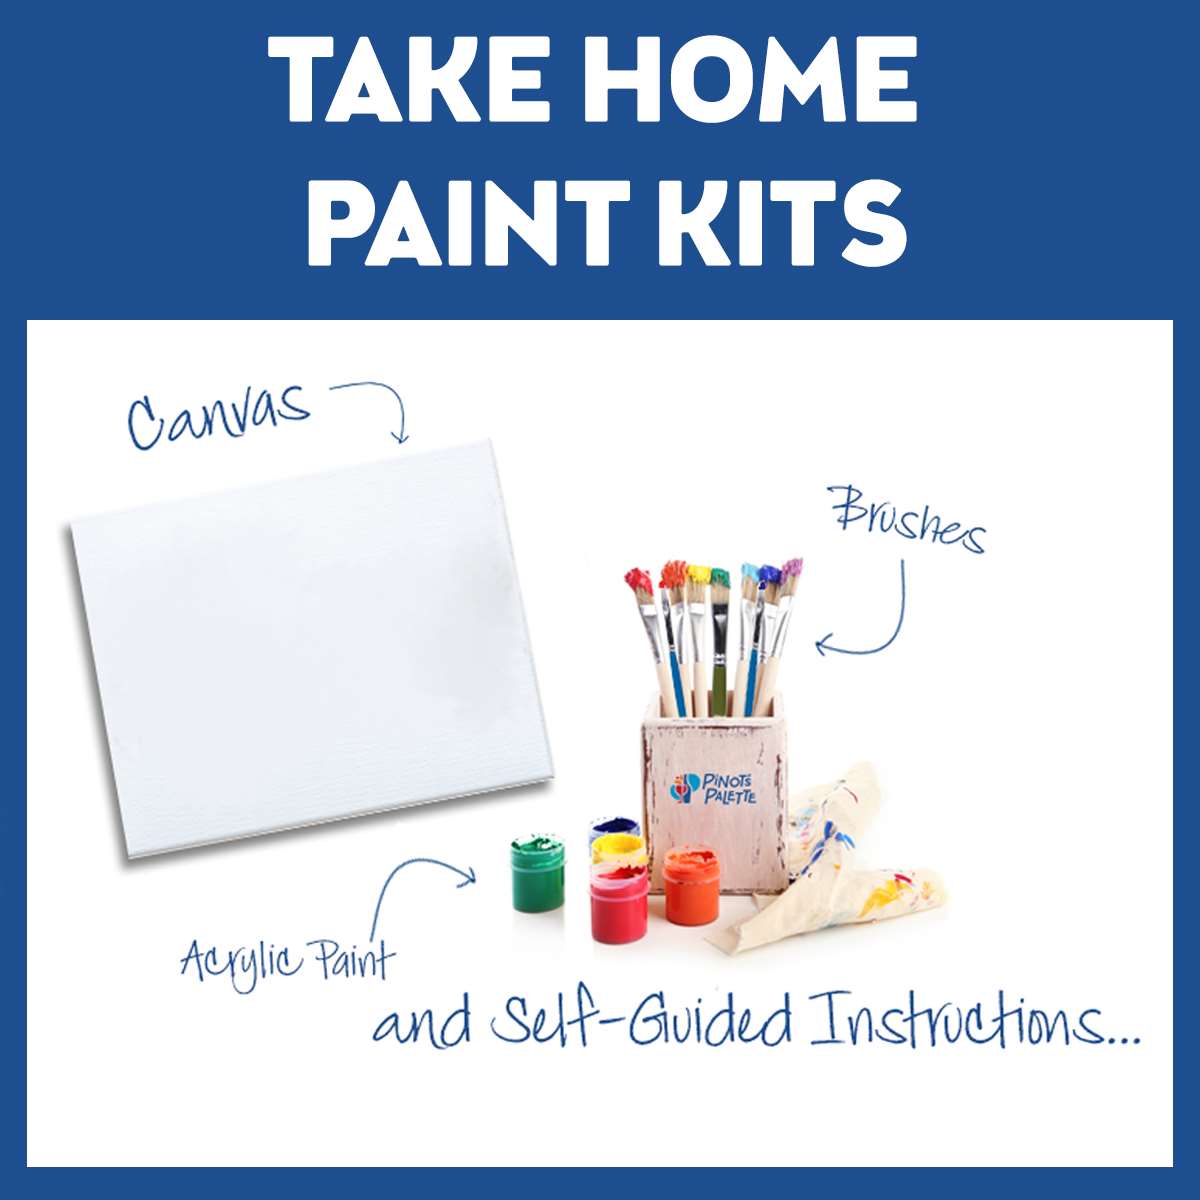 Take Home Paint Kits - Sat, Aug 22 10AM at Bricktown